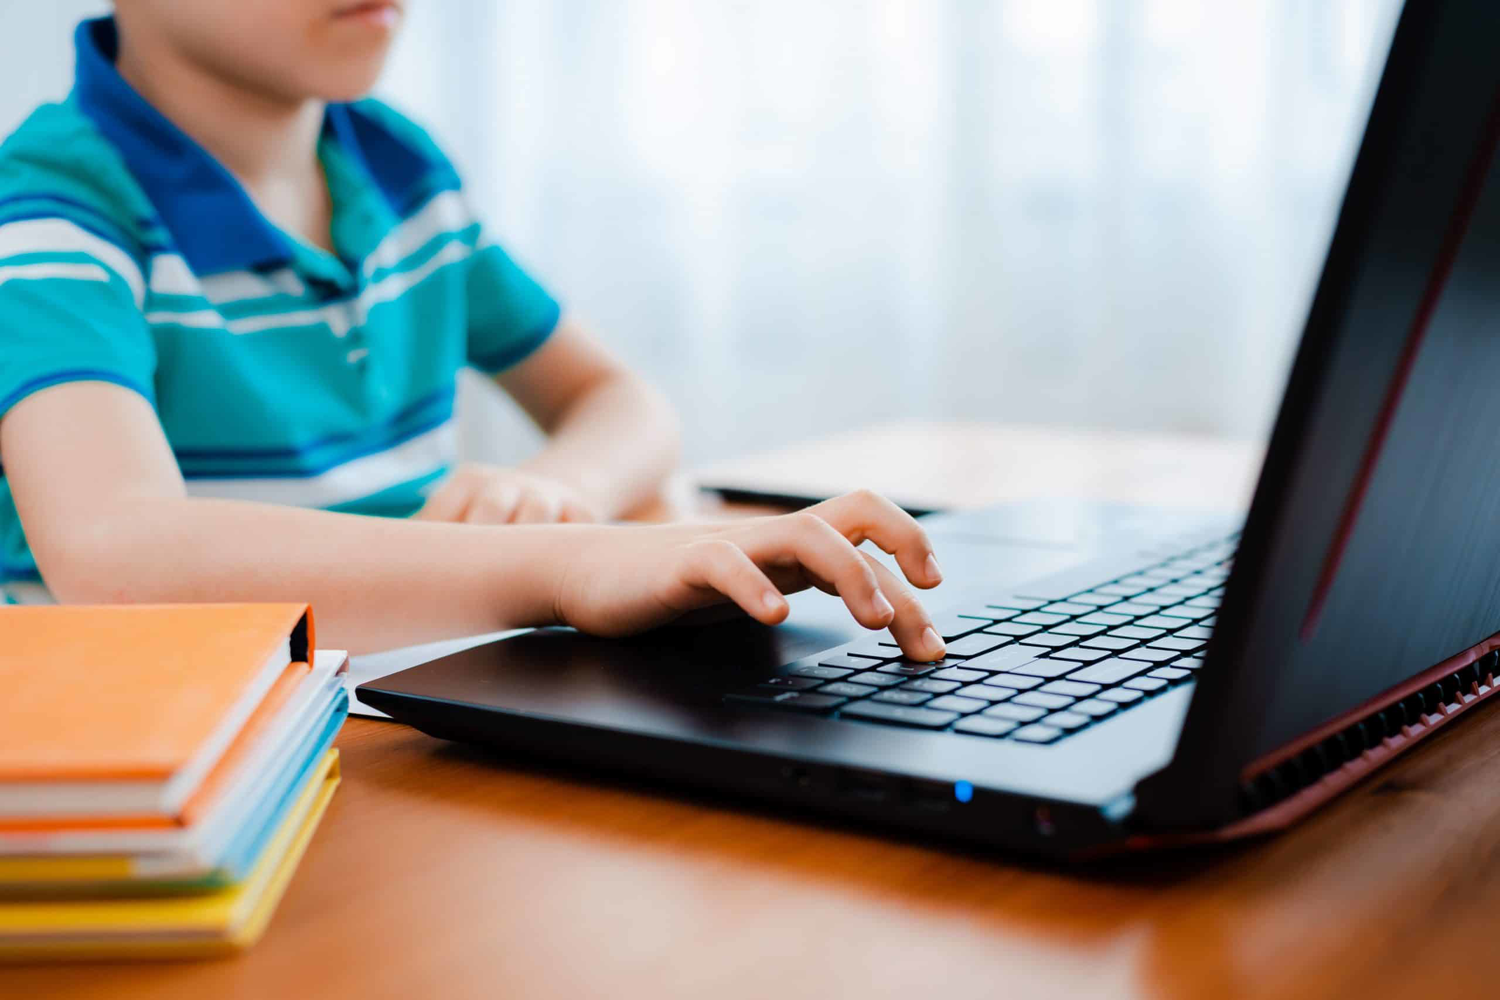 Уроки цифровой грамотности. Ребенок с ноутбуком. Дистанционное обучение школьников. Обучение дистанционно до конца года